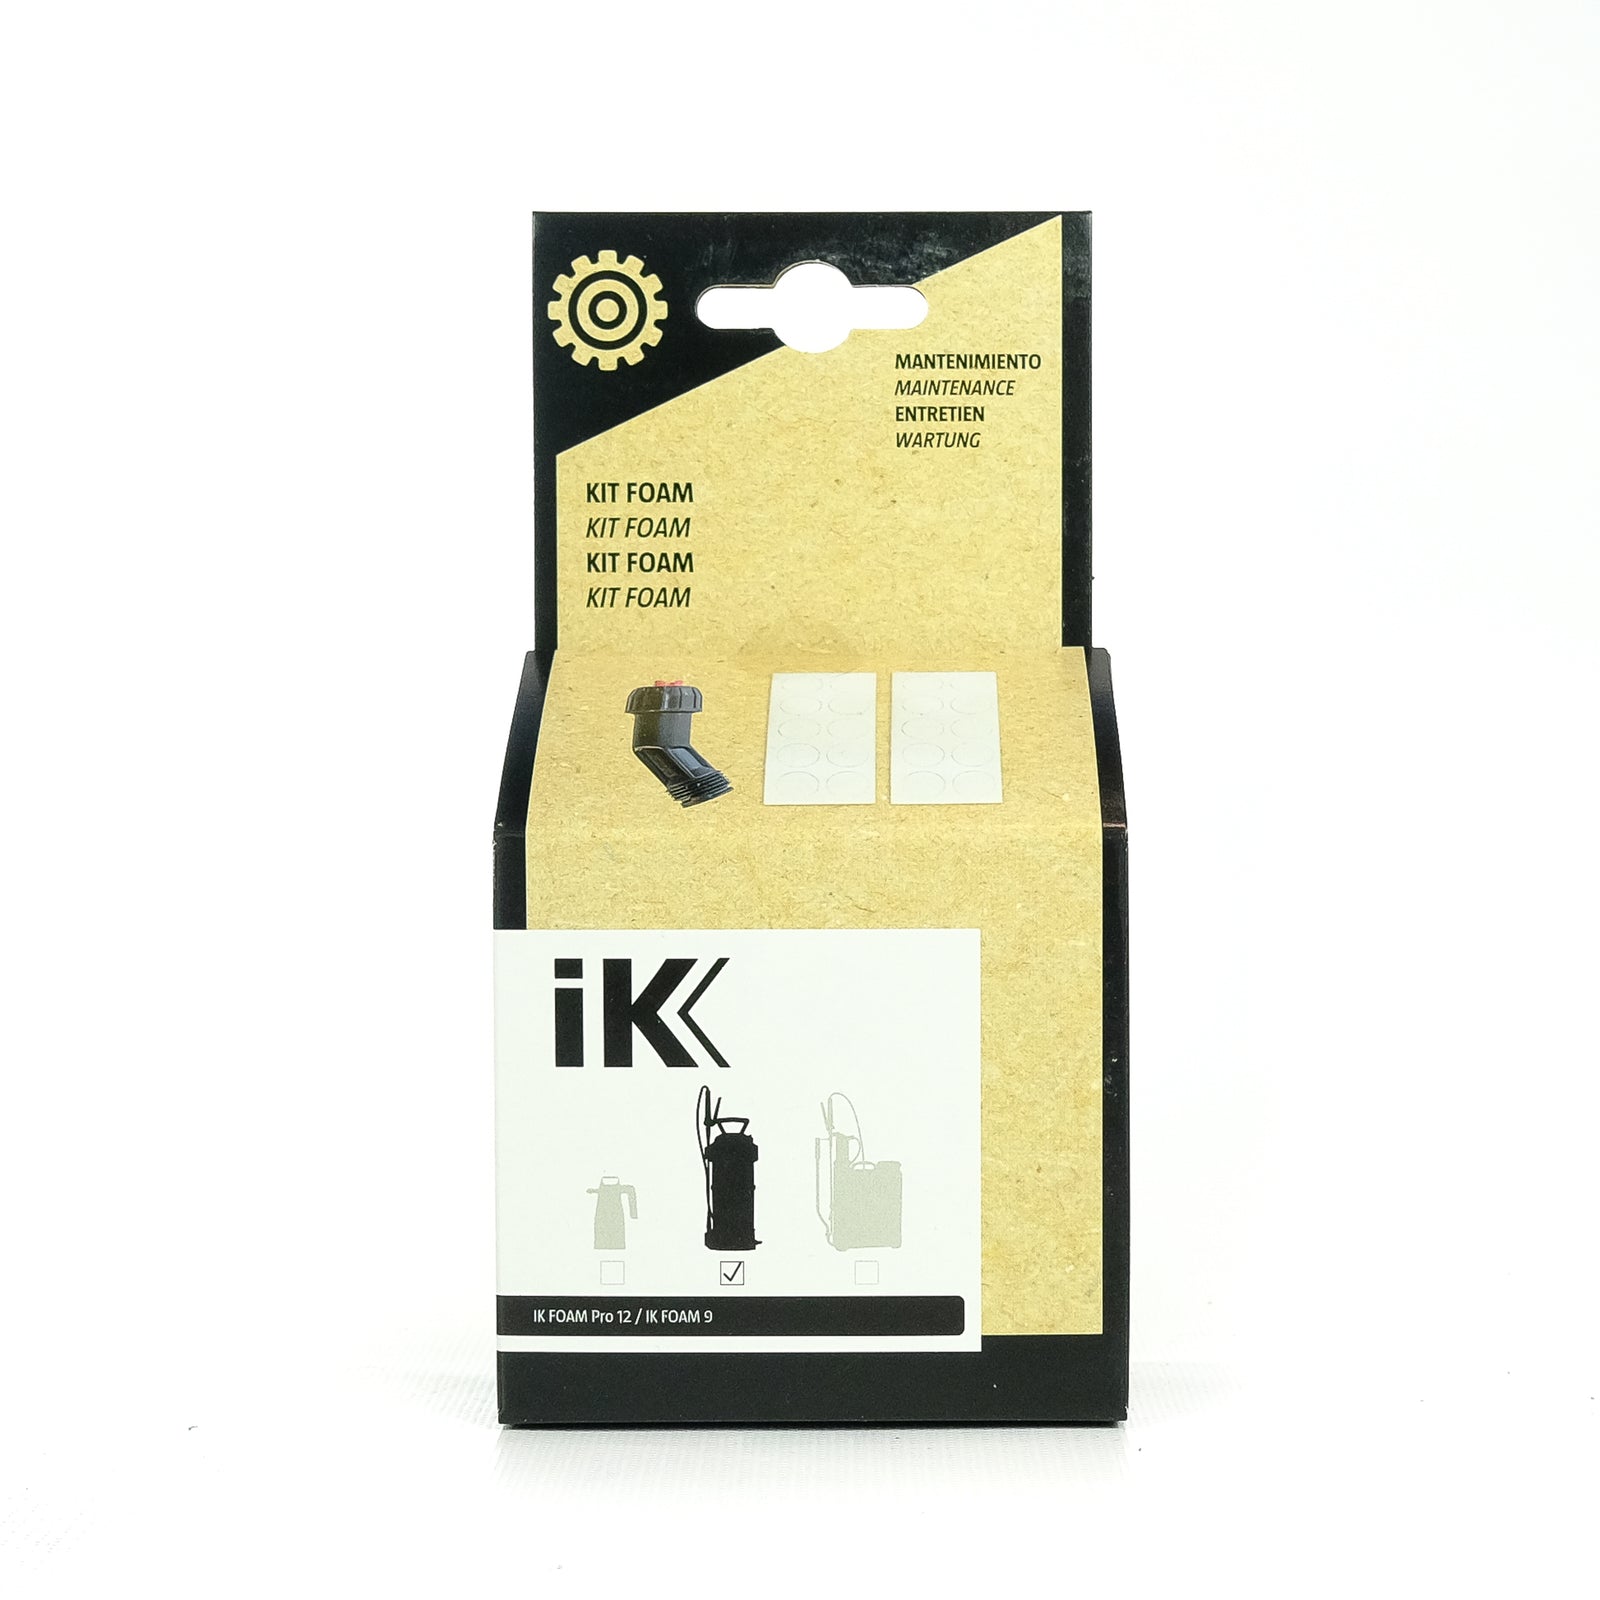 iK Sprayer Maintenance Kit (FOAM PRO 12 NOZZLE & FELT) - Chem-X